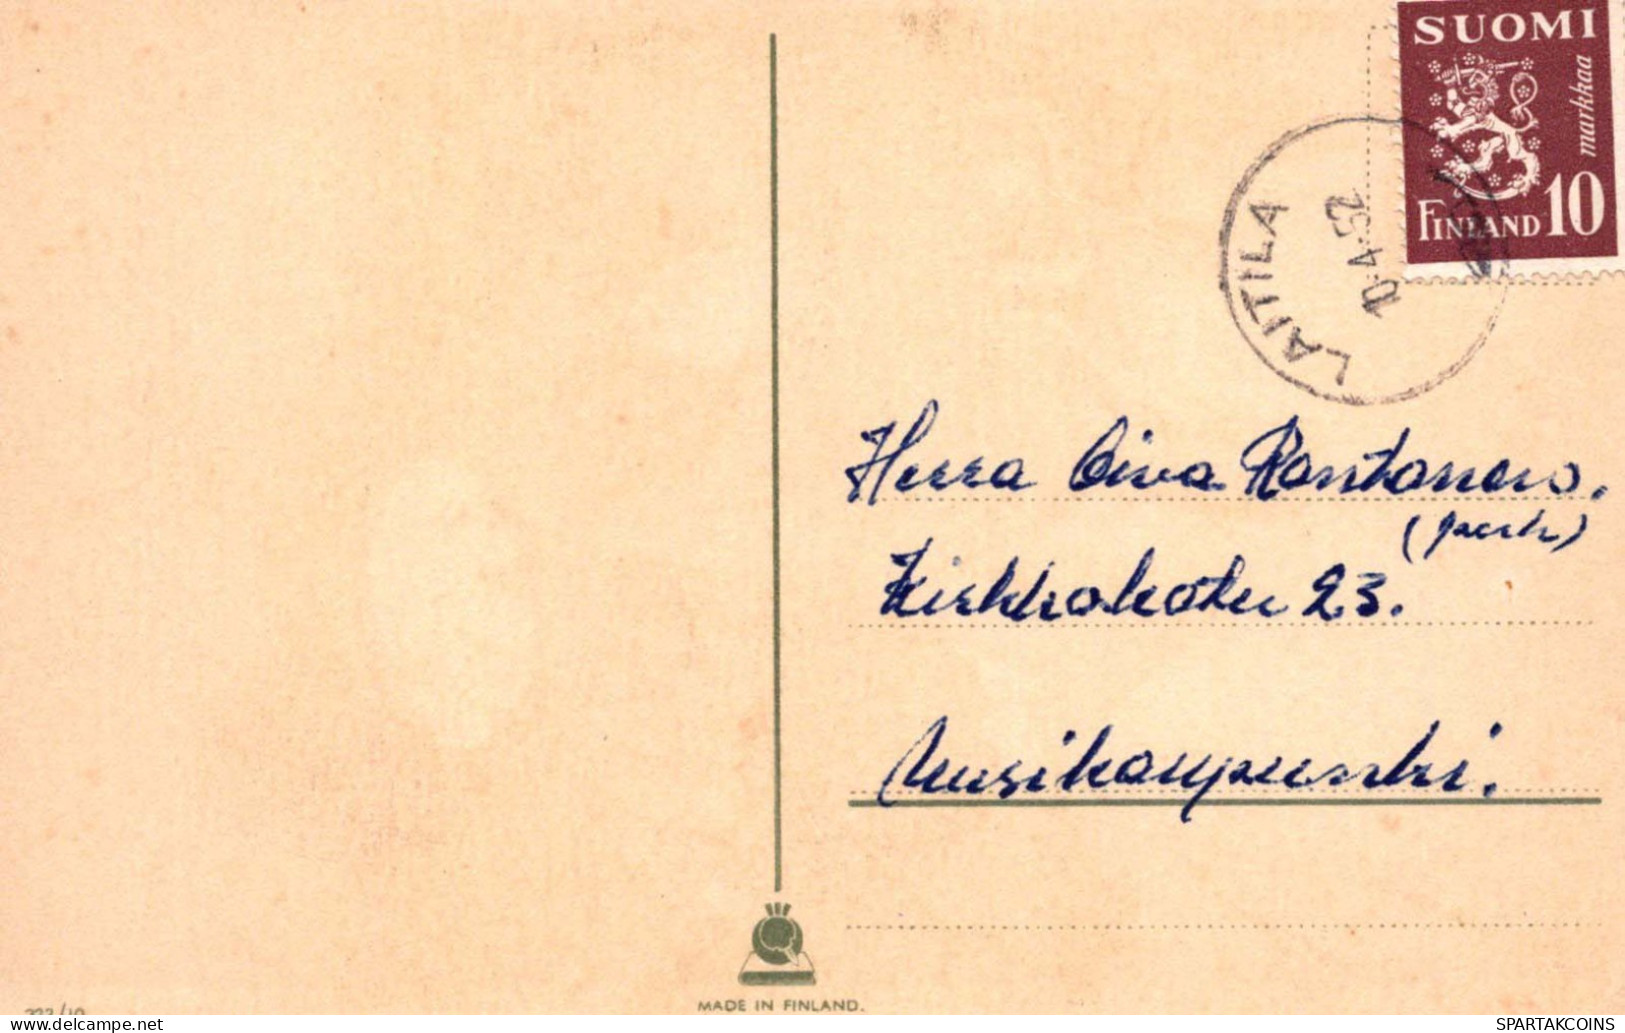 PASCUA CONEJO HUEVO Vintage Tarjeta Postal CPA #PKE287.A - Pâques